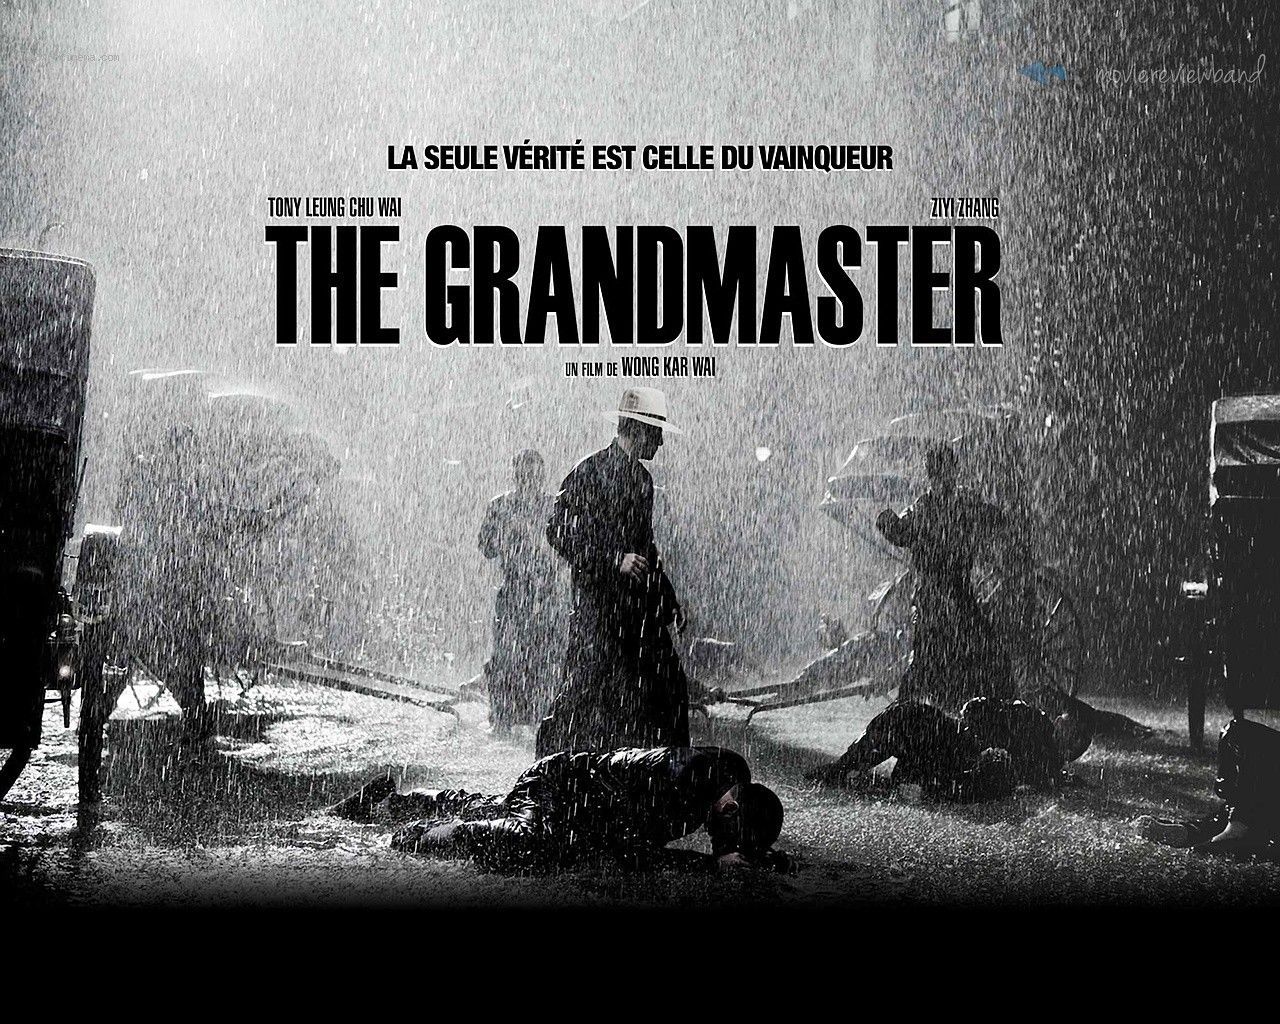 The Grandmaster. The grandmaster, Martial arts movies, Martial arts film